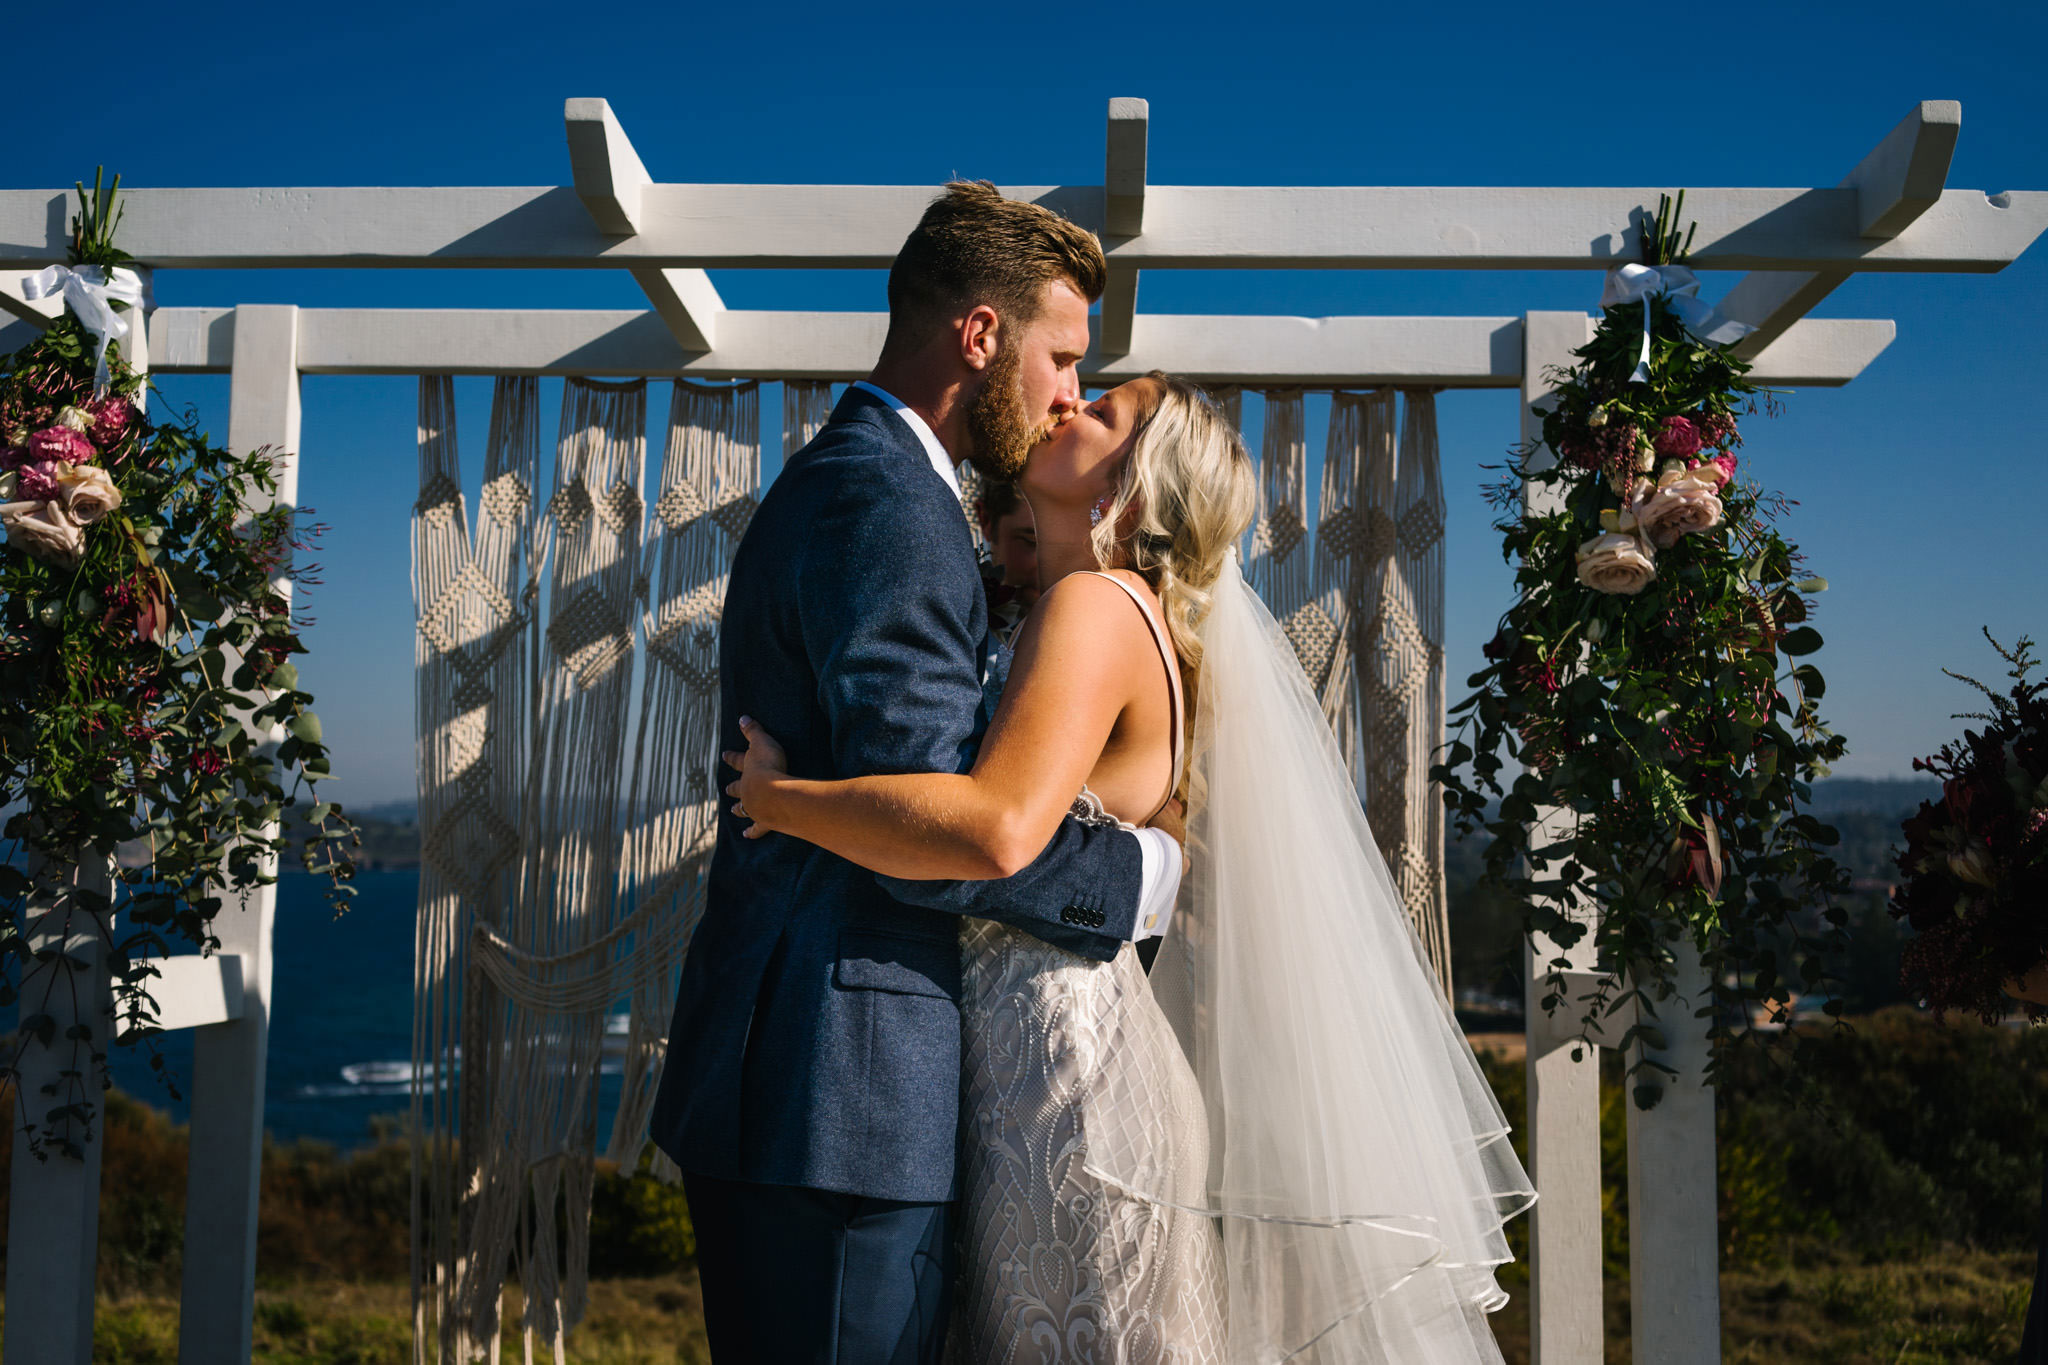 Newlyweds first kiss under boho wedding altar at outdoor headland ceremony